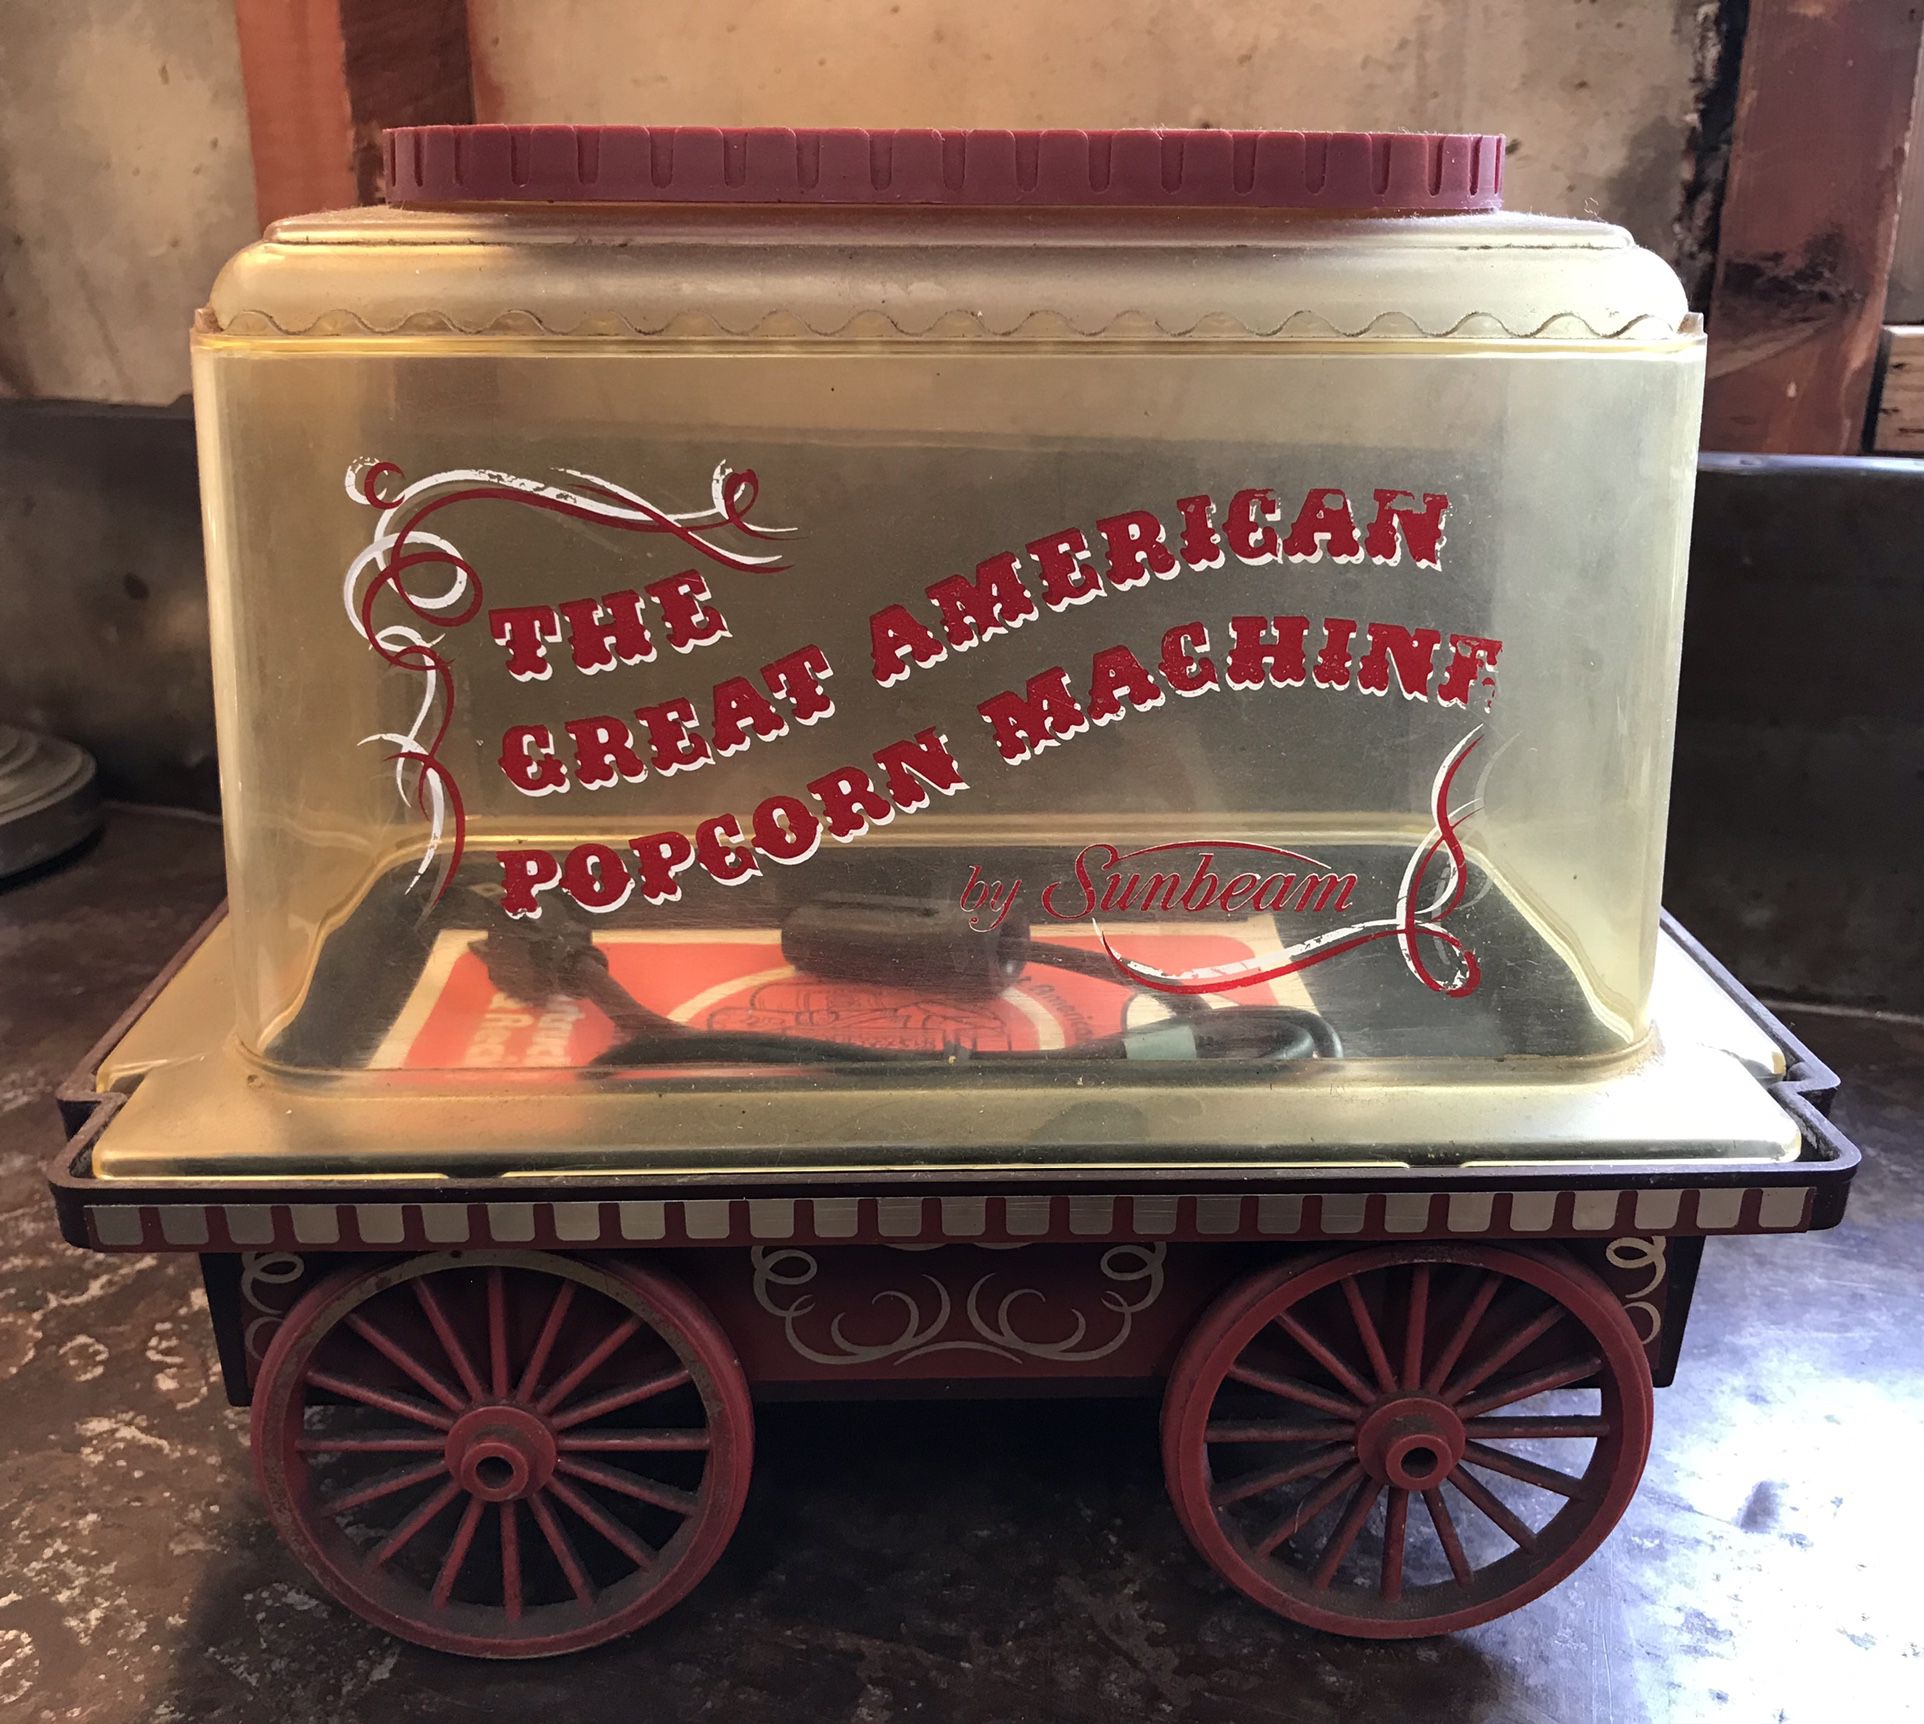 The Great American Corn Popper Popcorn Machine by Sunbeam US Vintage Wagon